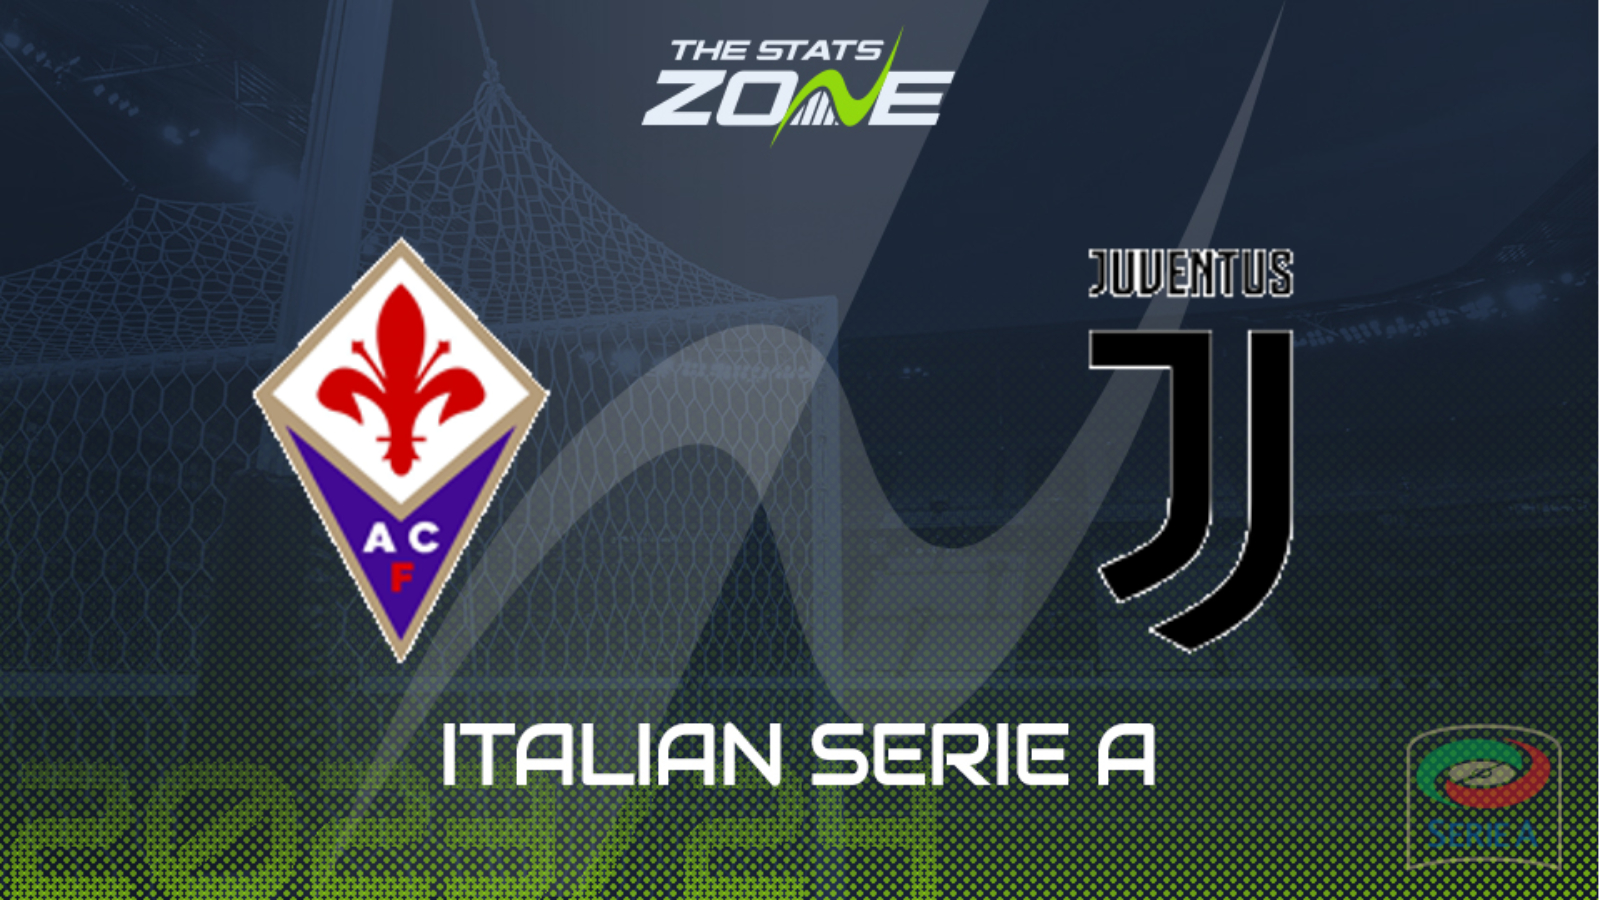 Fiorentina vs Juventus: Match preview - Juventus